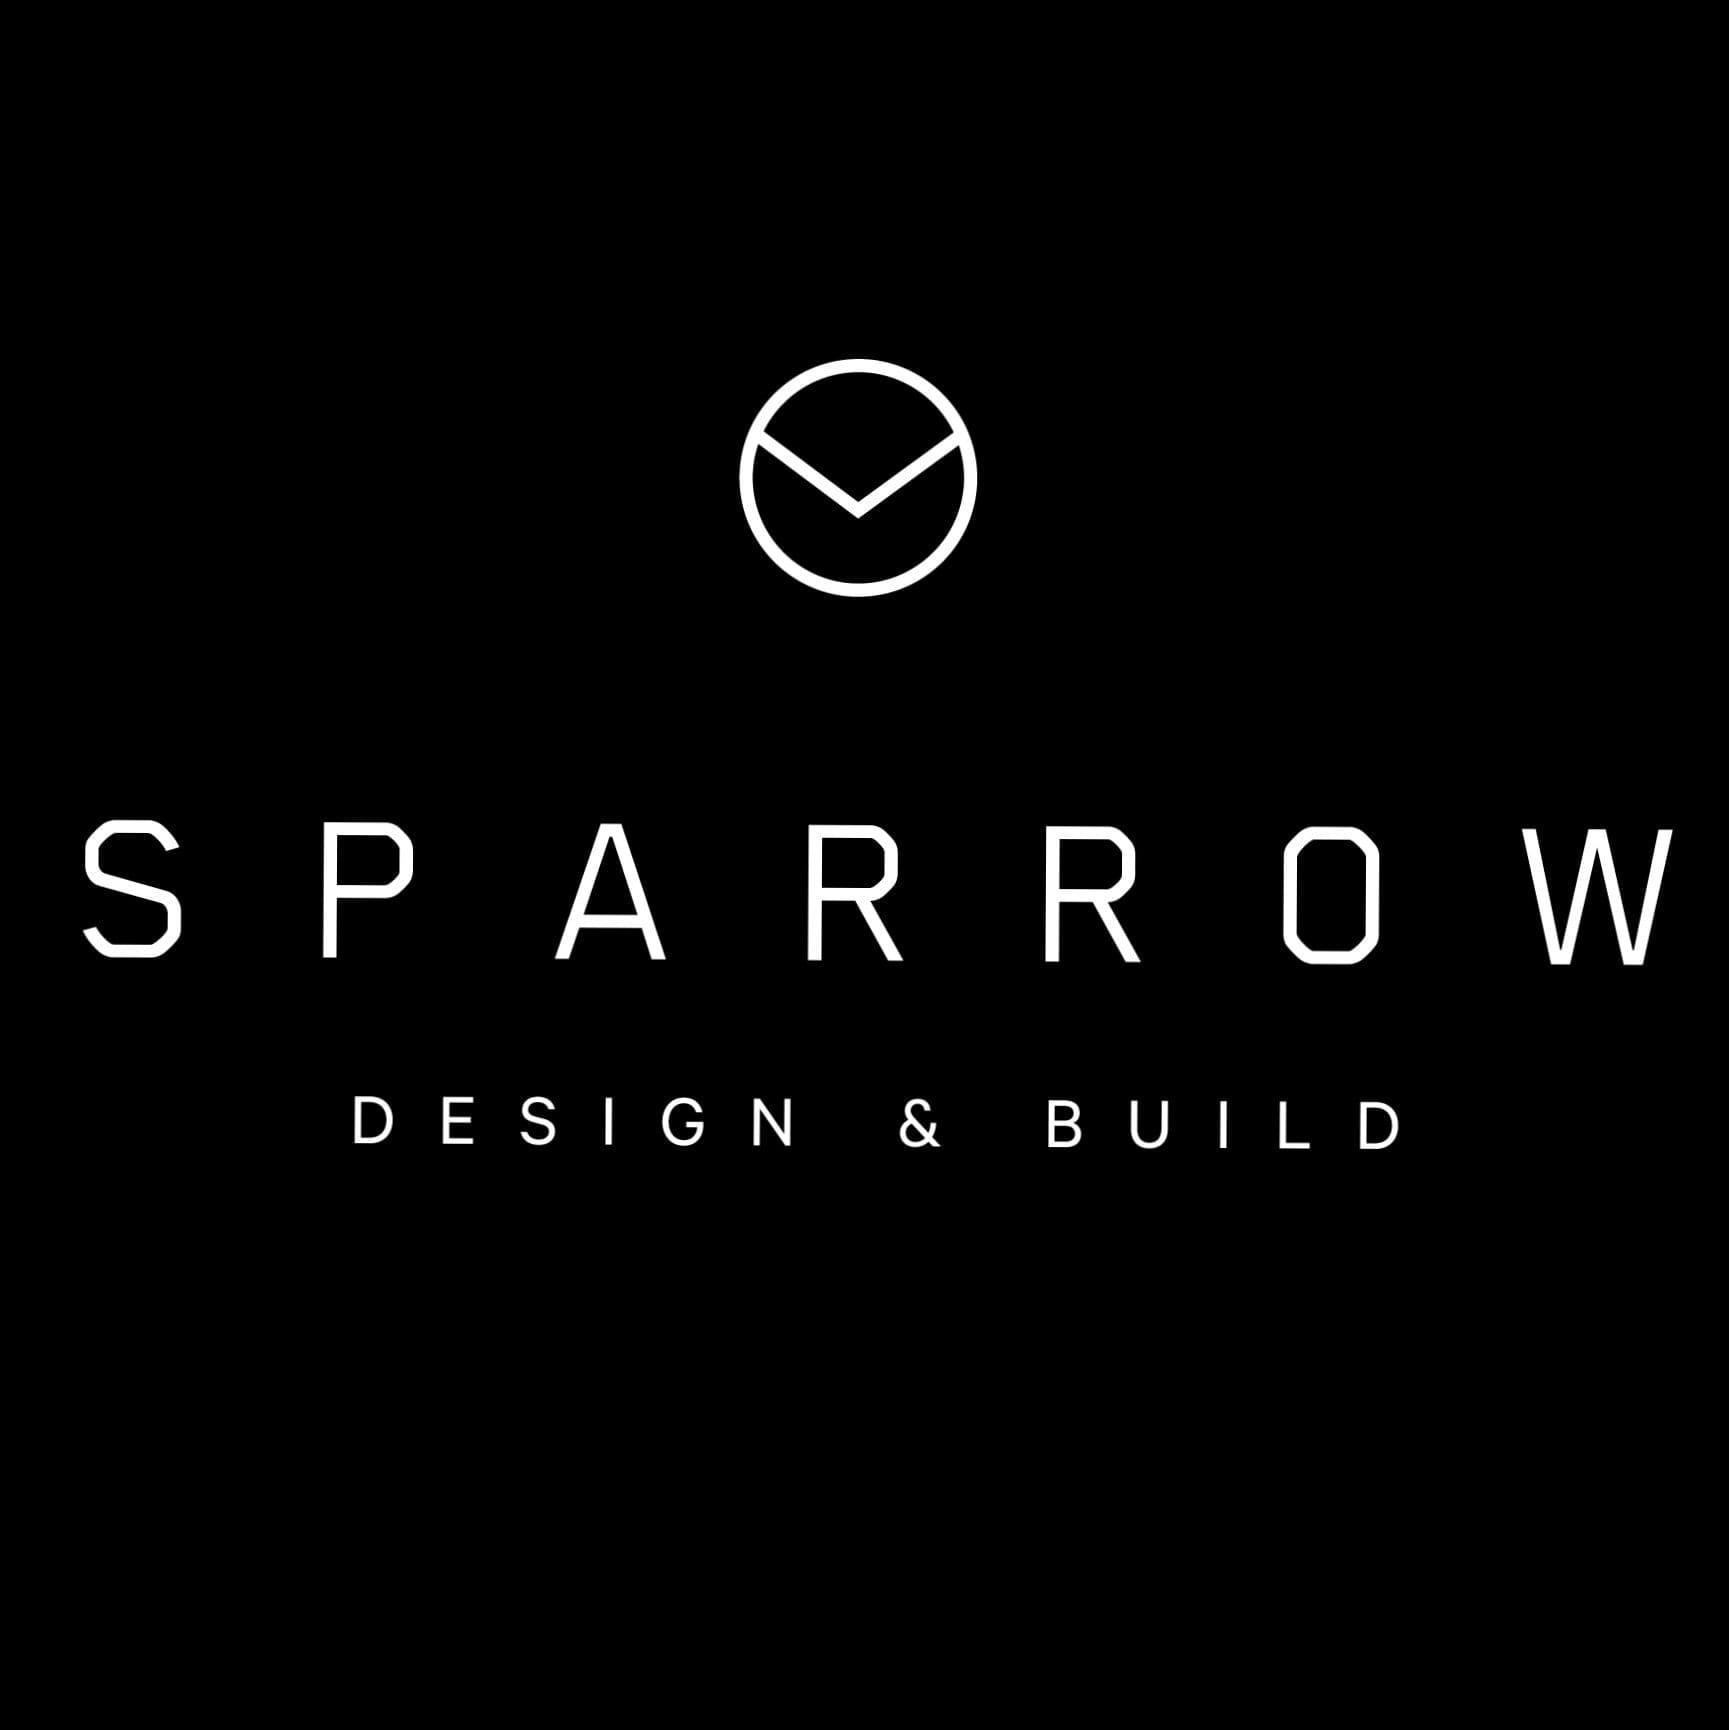 Sparrow Design & Build - London, London W7 3TH - 020 8050 8265 | ShowMeLocal.com